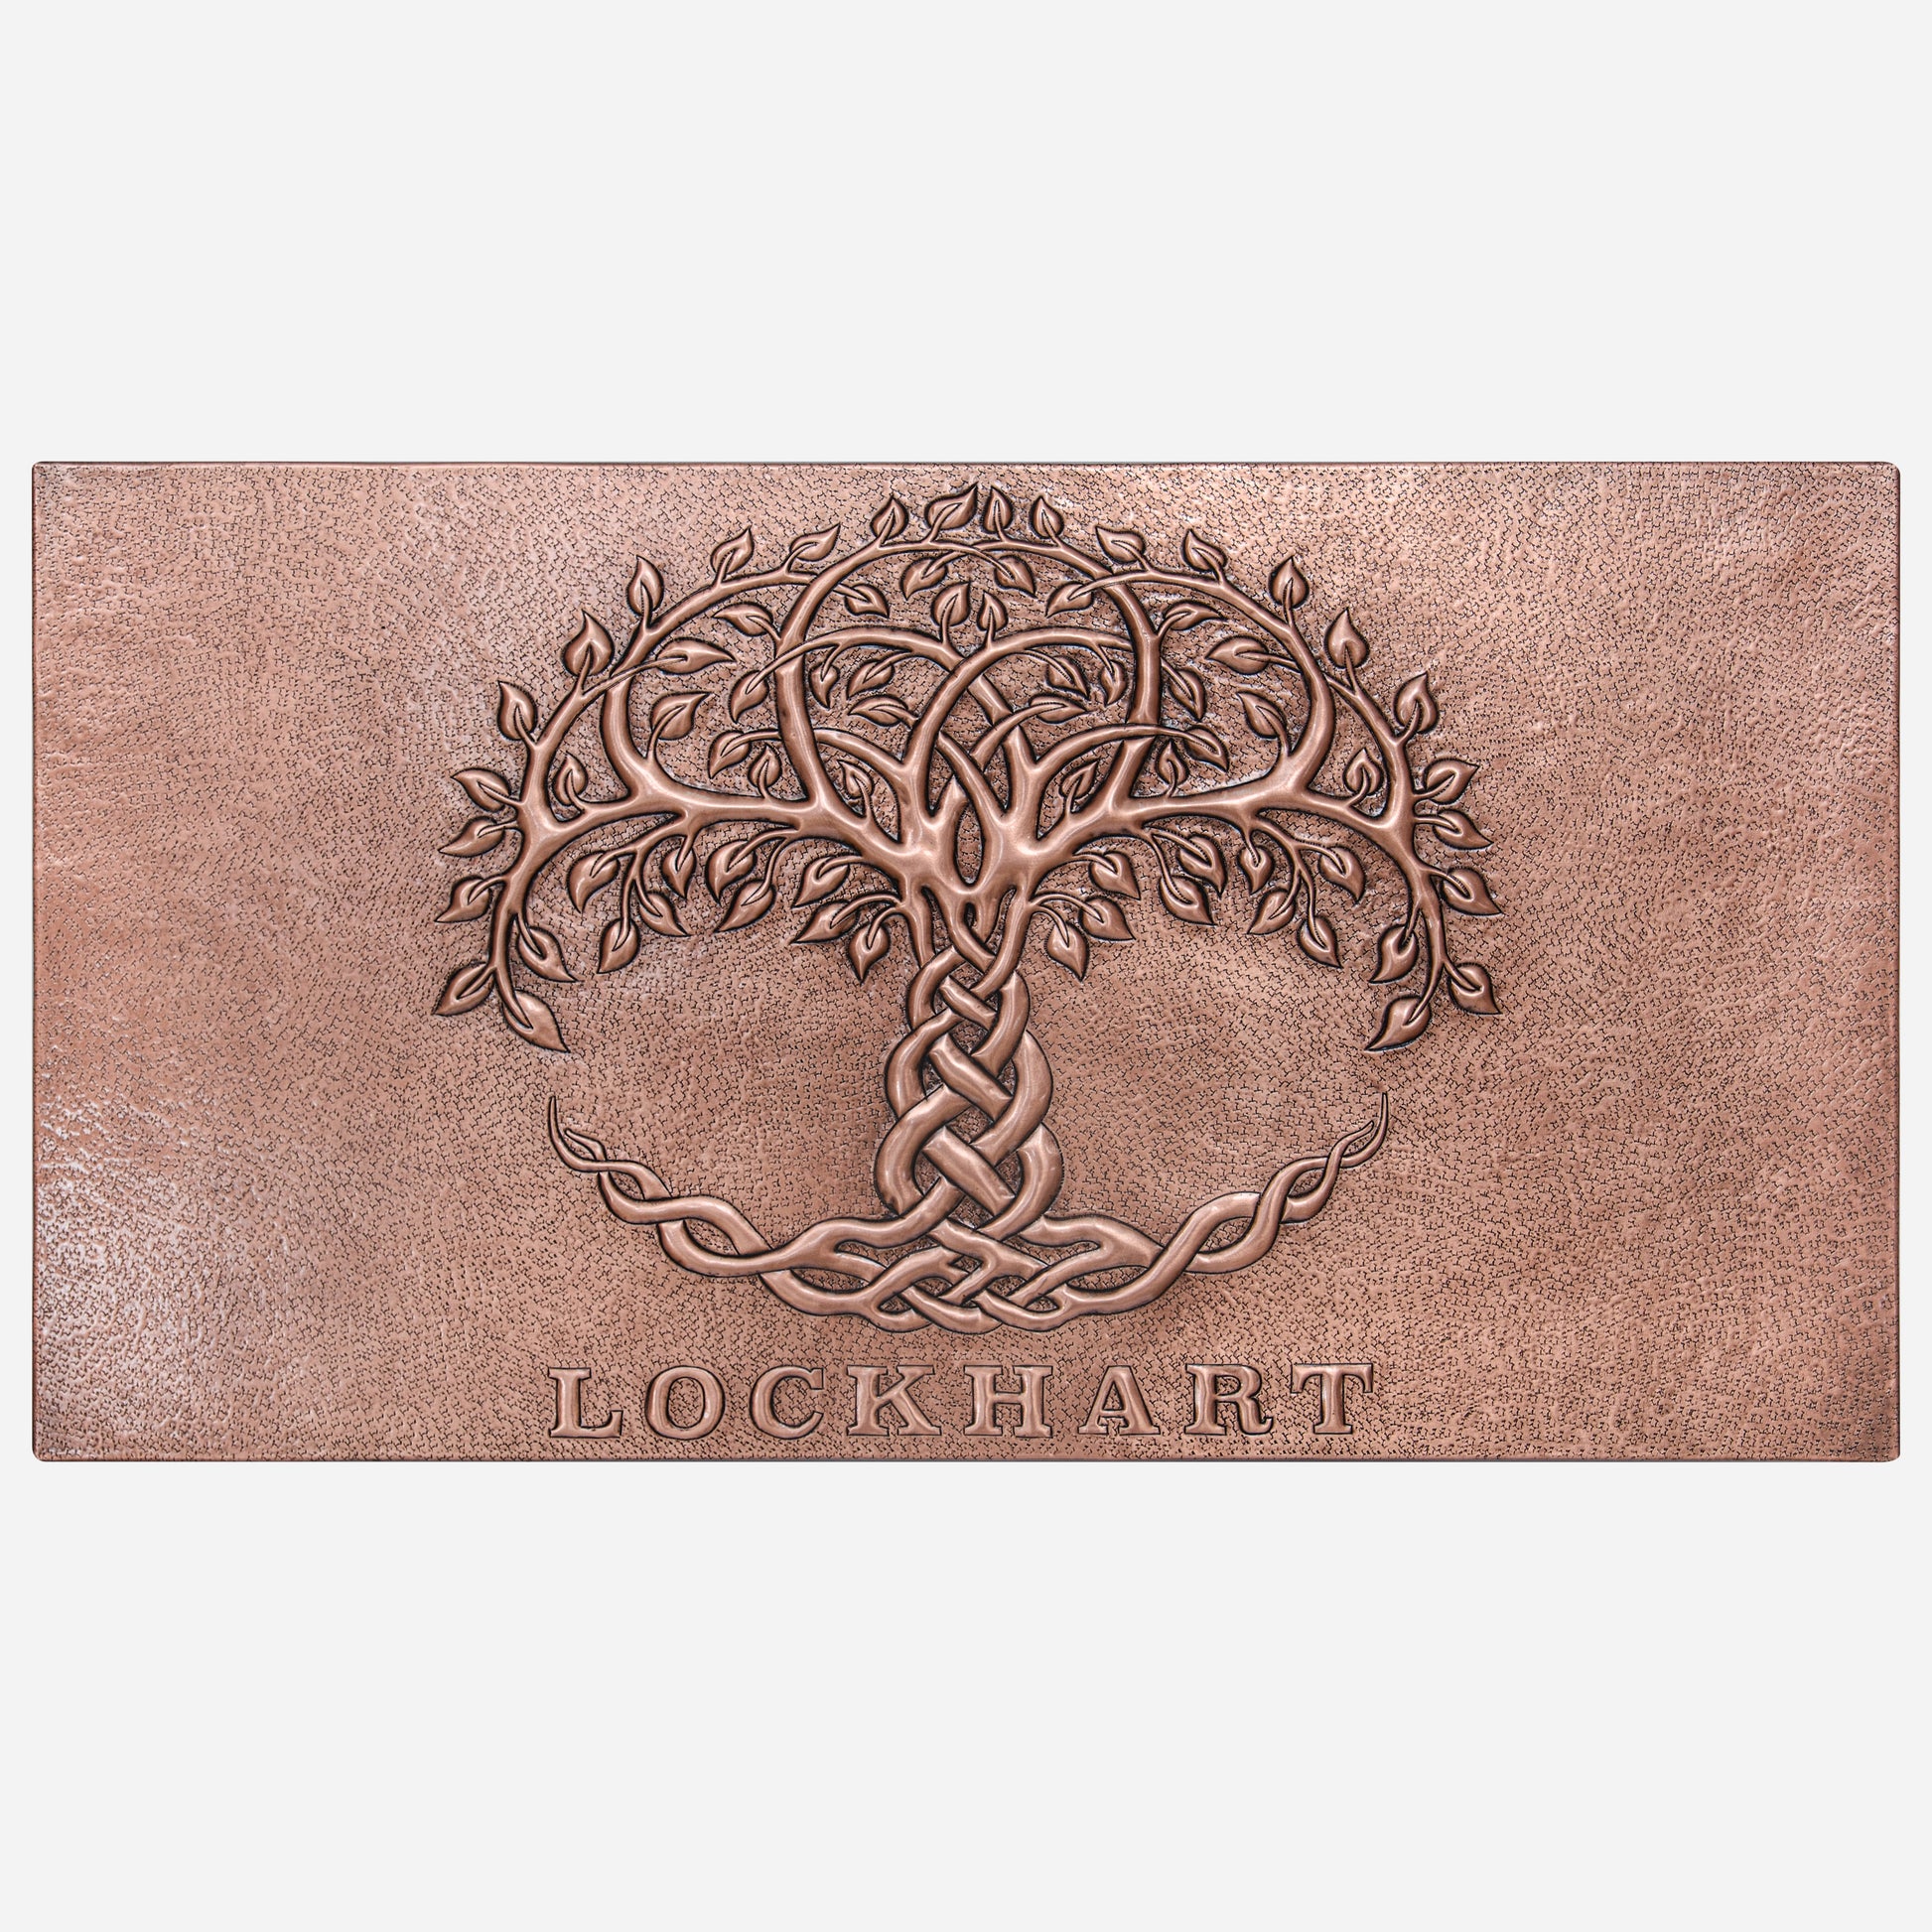 Copper Backsplash Panel (Celtic Tree of Life, Personalized)